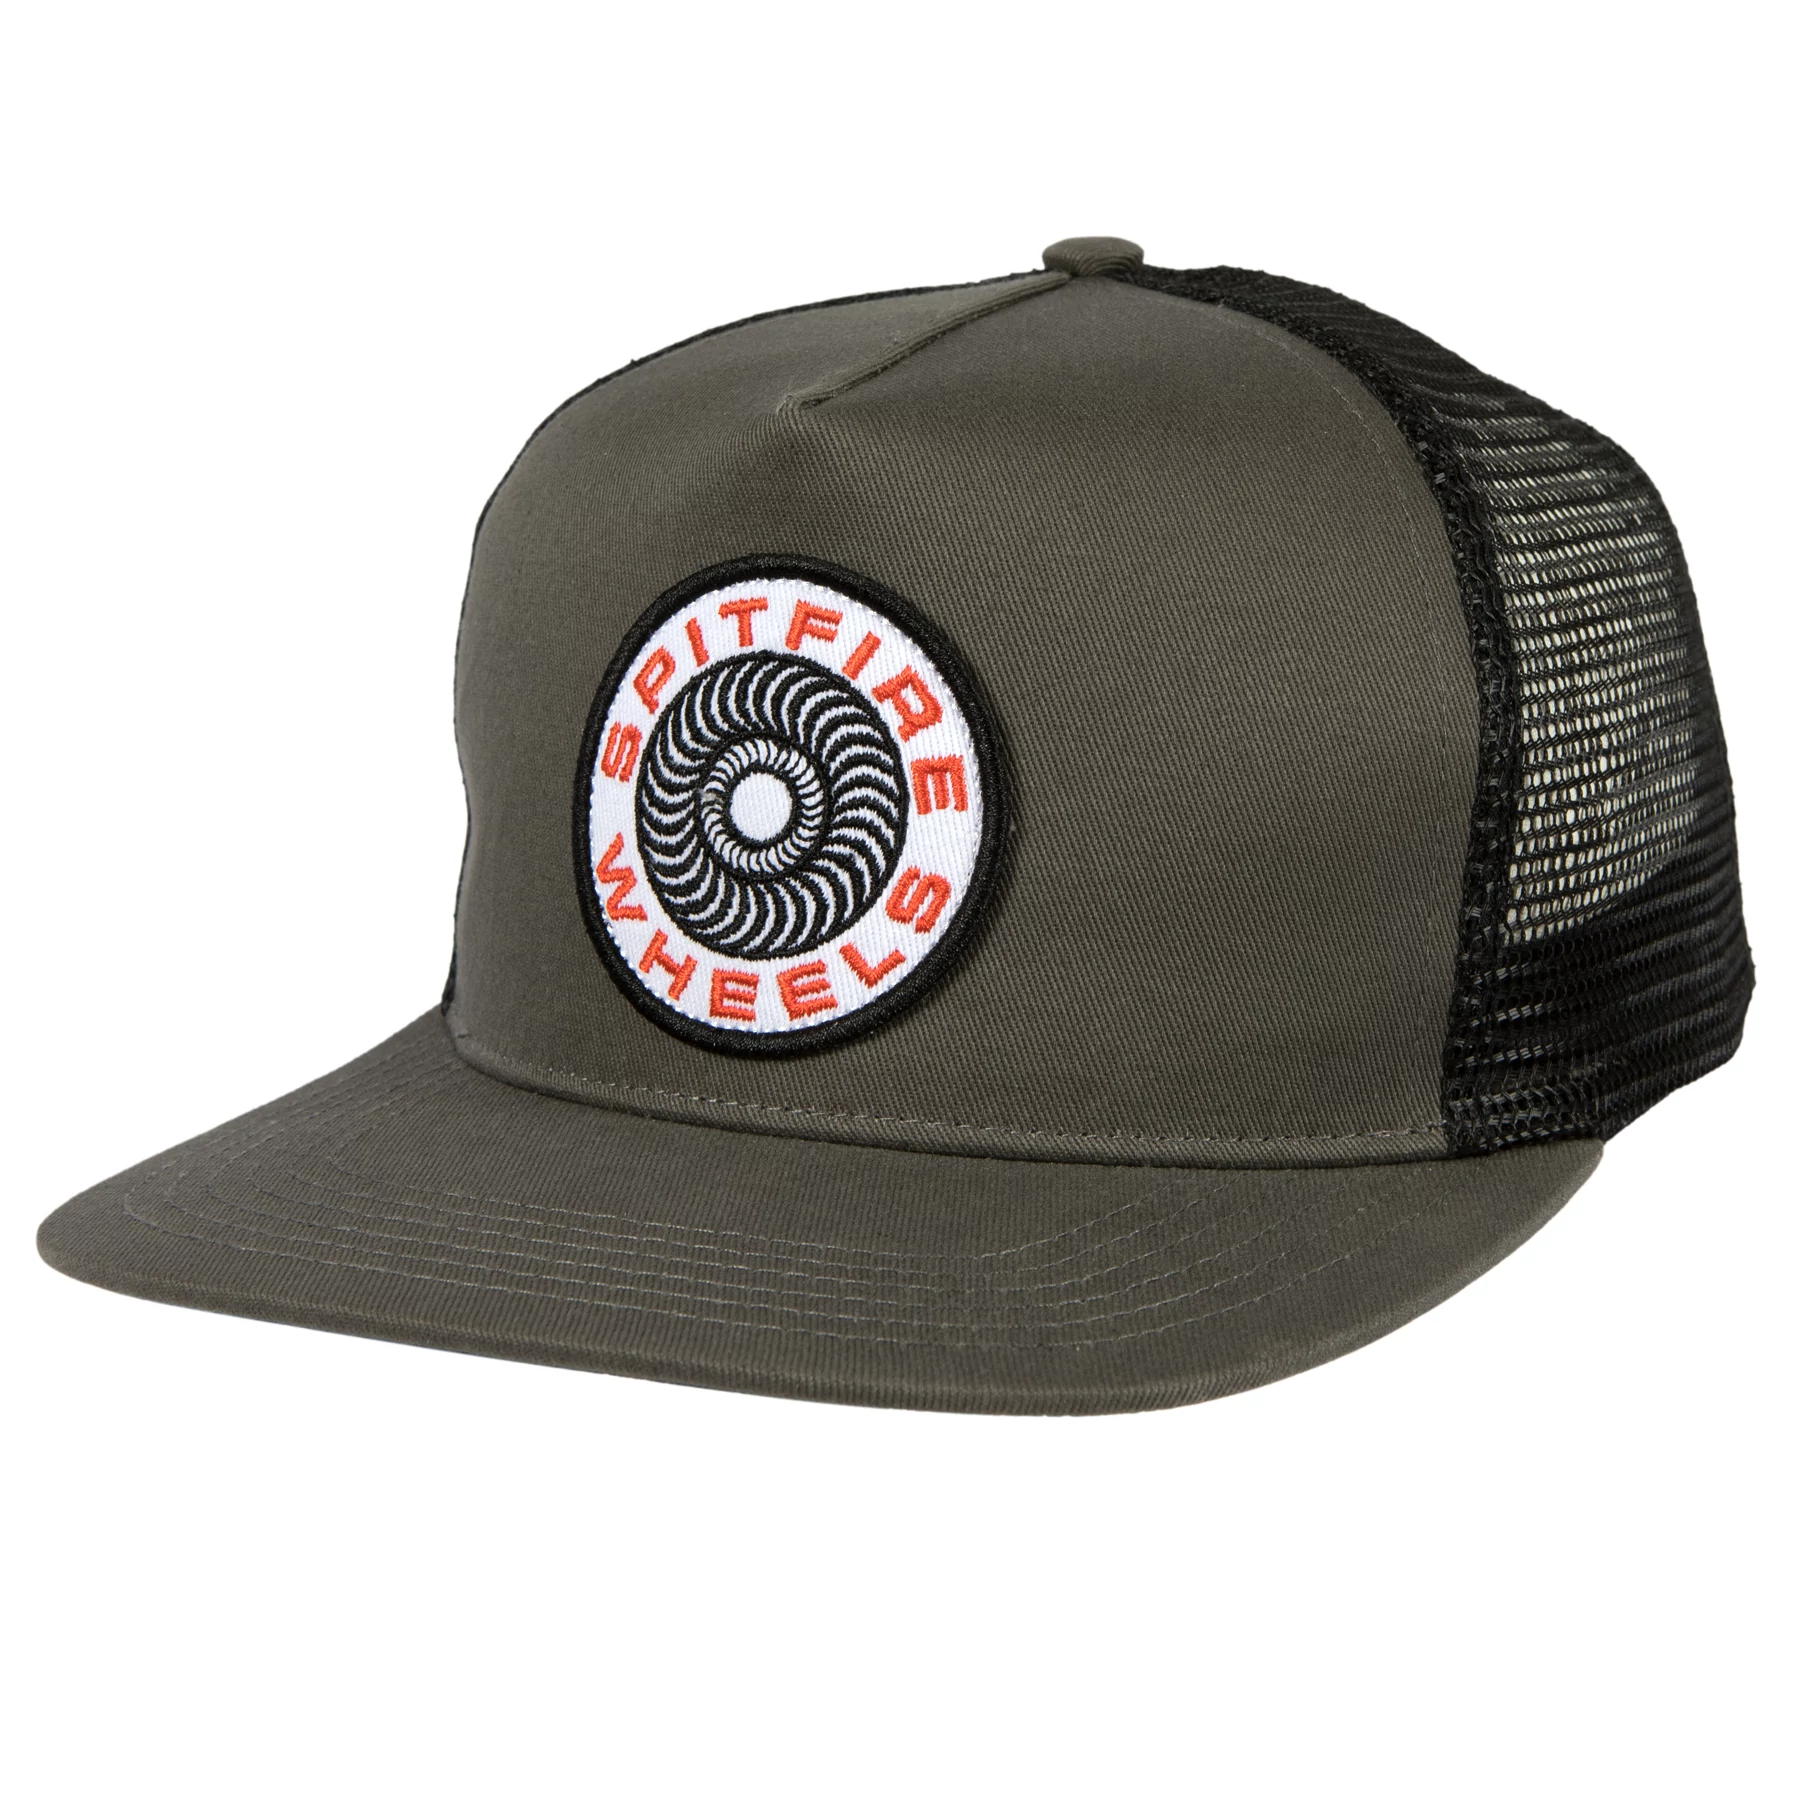 Charcoal 87' Swirl Spitfire Patch Trucker Hat